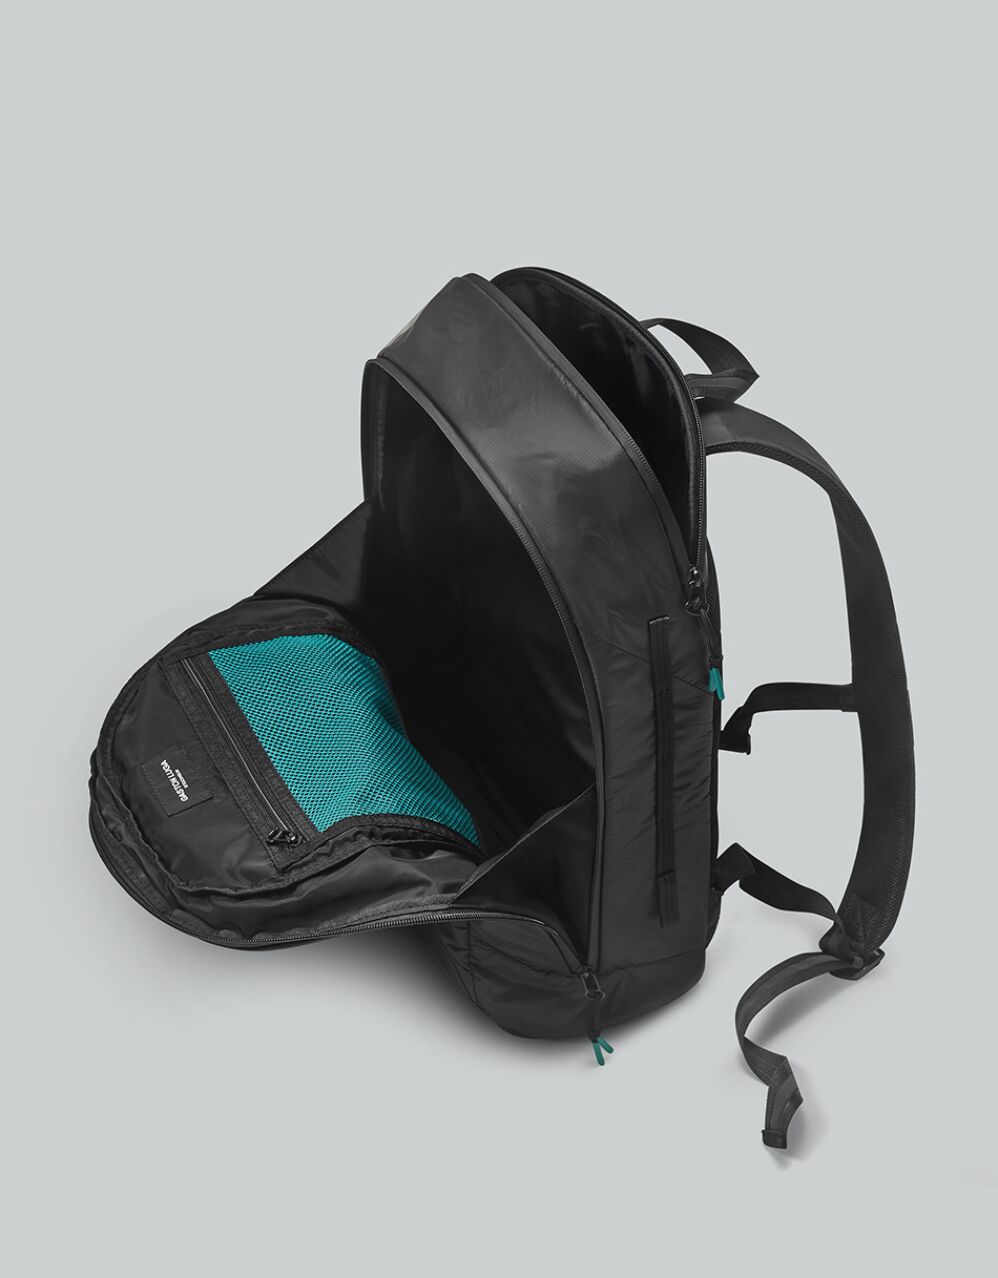 Gaston Luga Solid Black Backpack One Size - 59% off